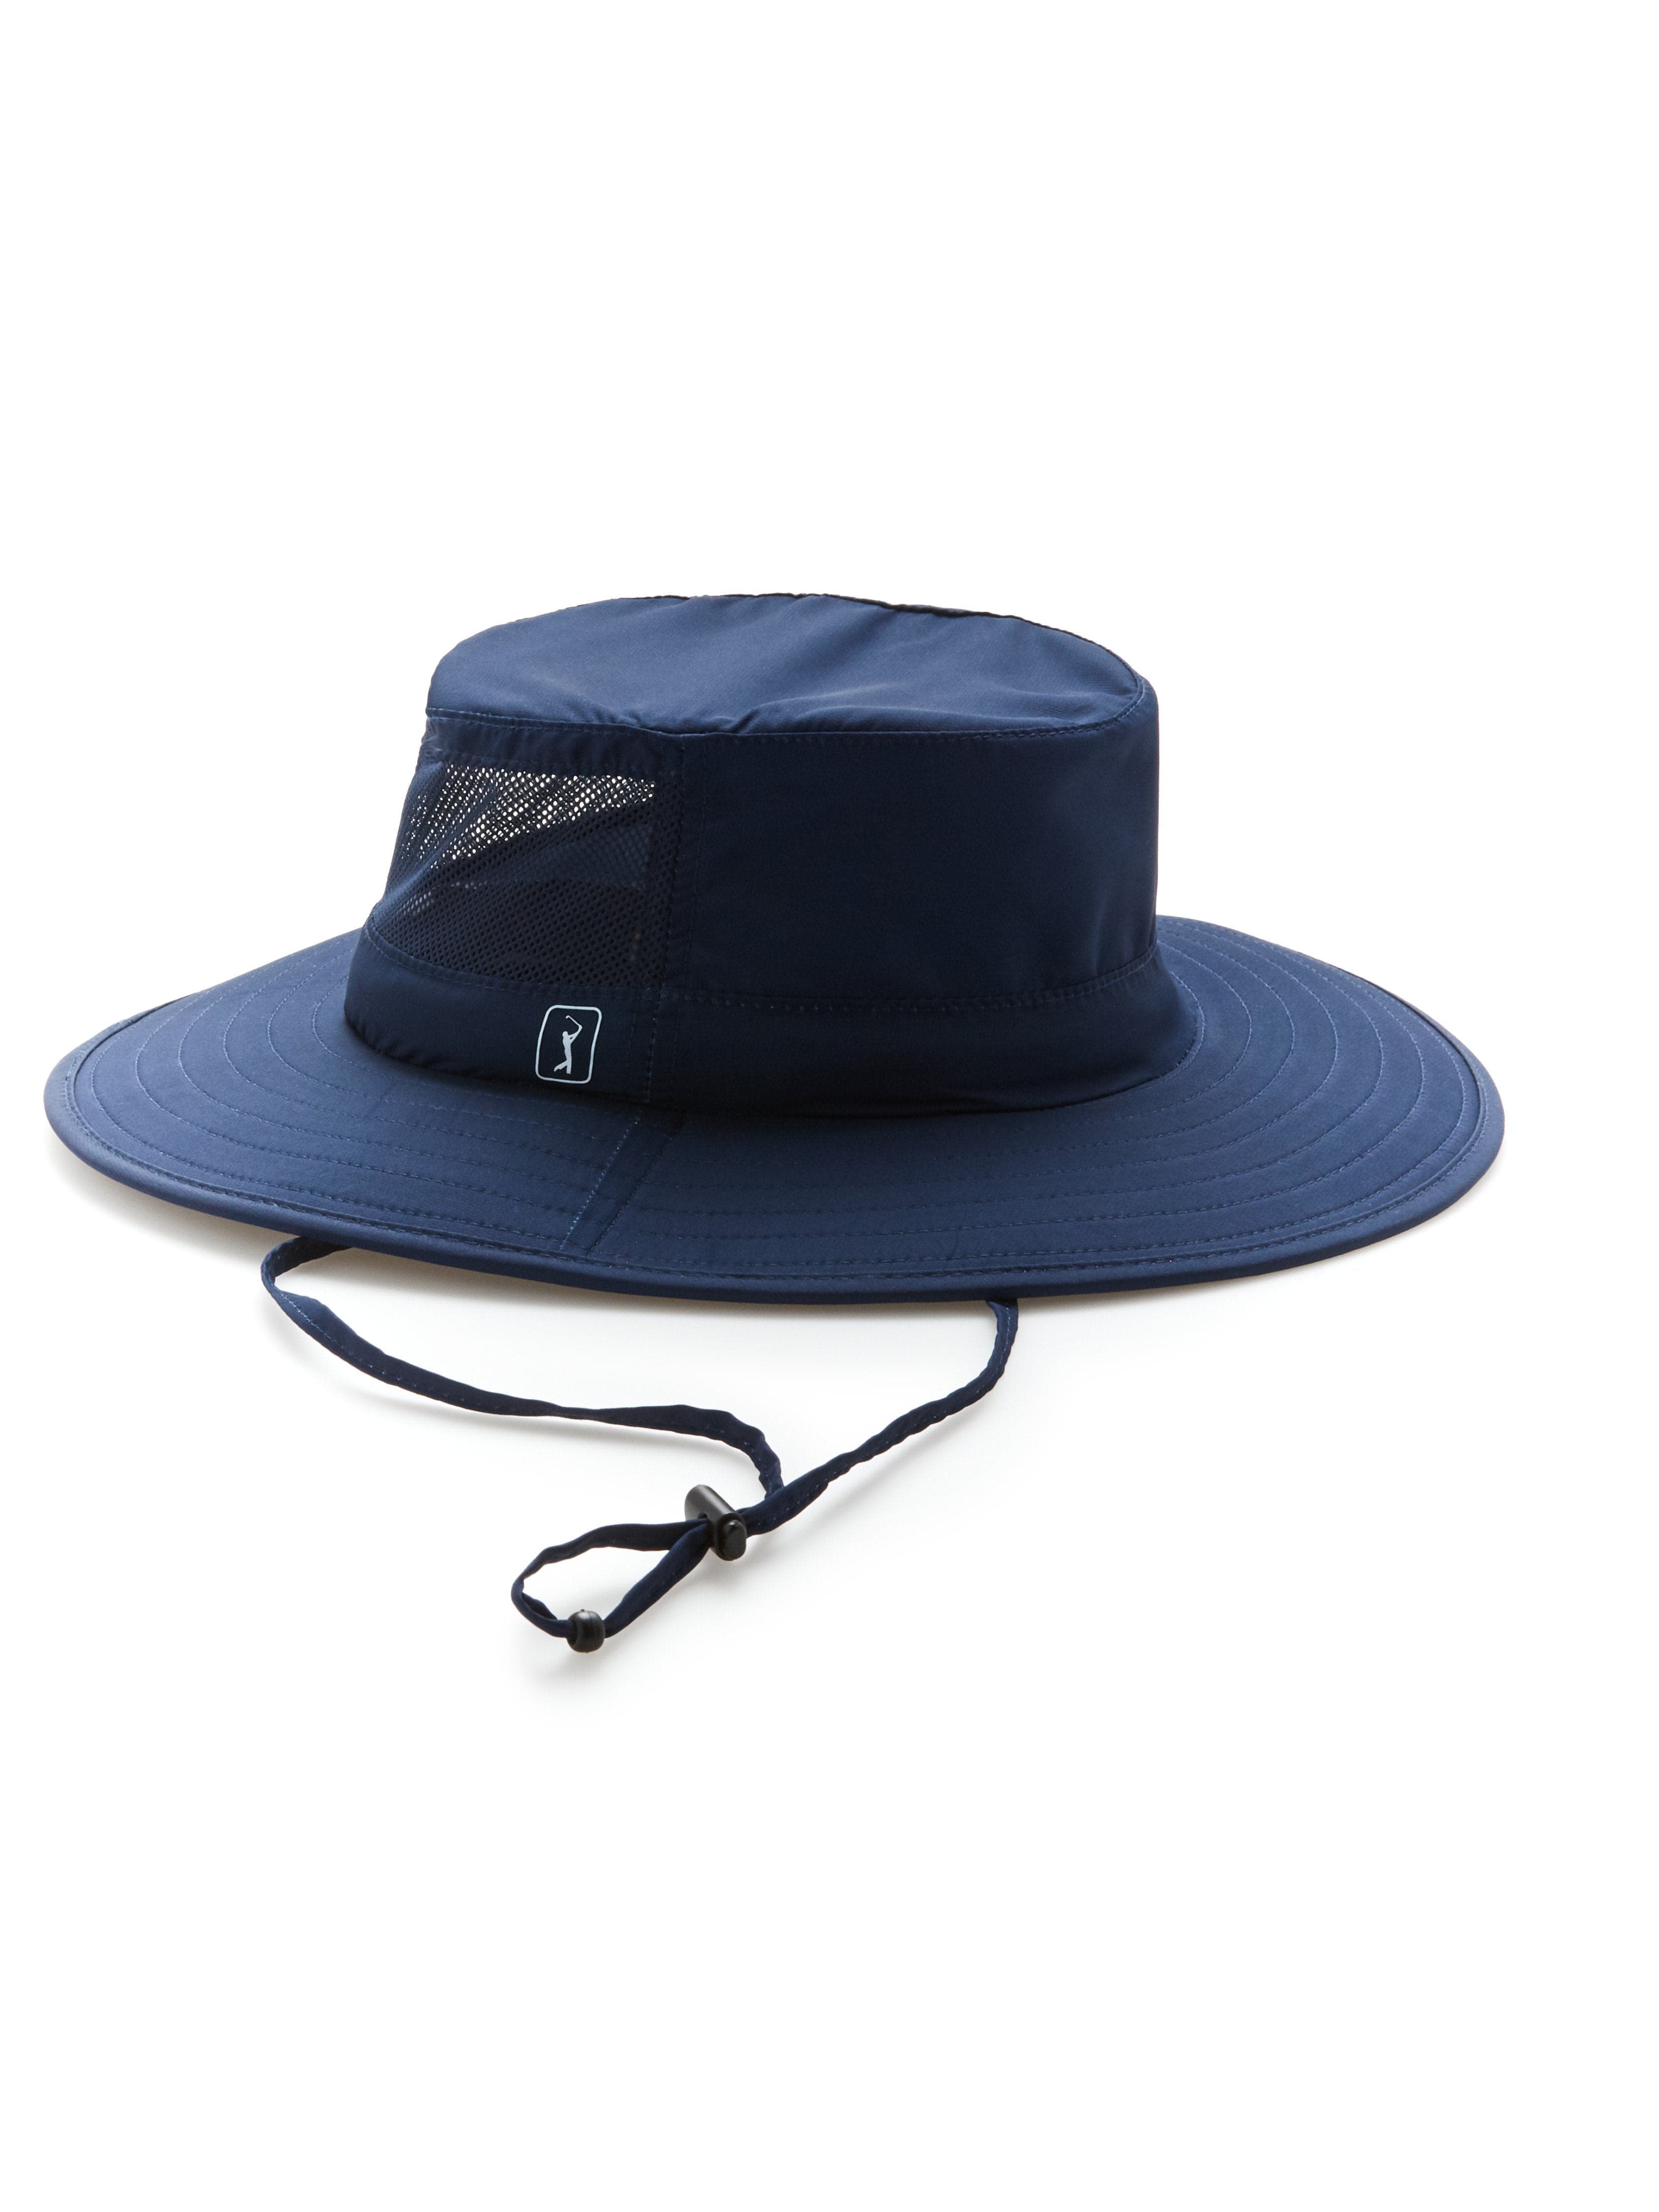 PGA TOUR Apparel Solar Boonie Hat, Navy Blue, 100% Polyester | Golf Apparel Shop